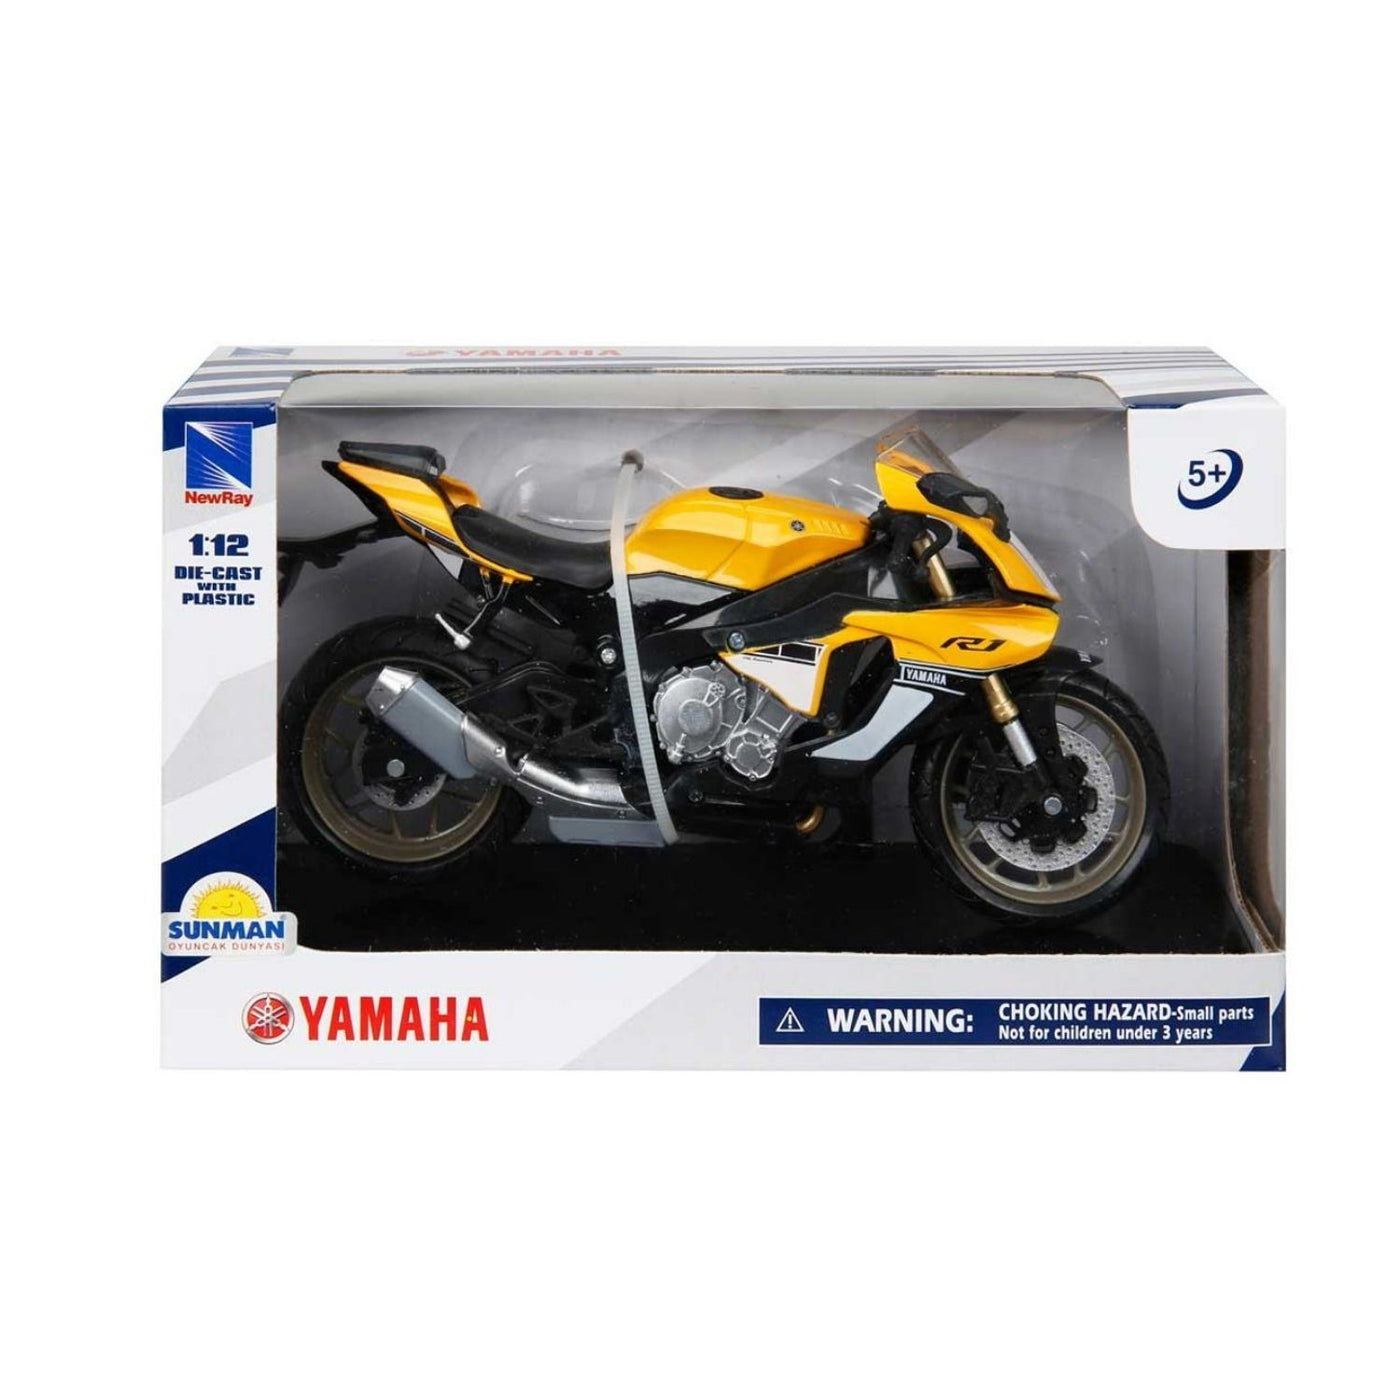 Moto miniature 1/12e Yamaha YZF 450 Tomac 3 (2022) New Ray – Miniature